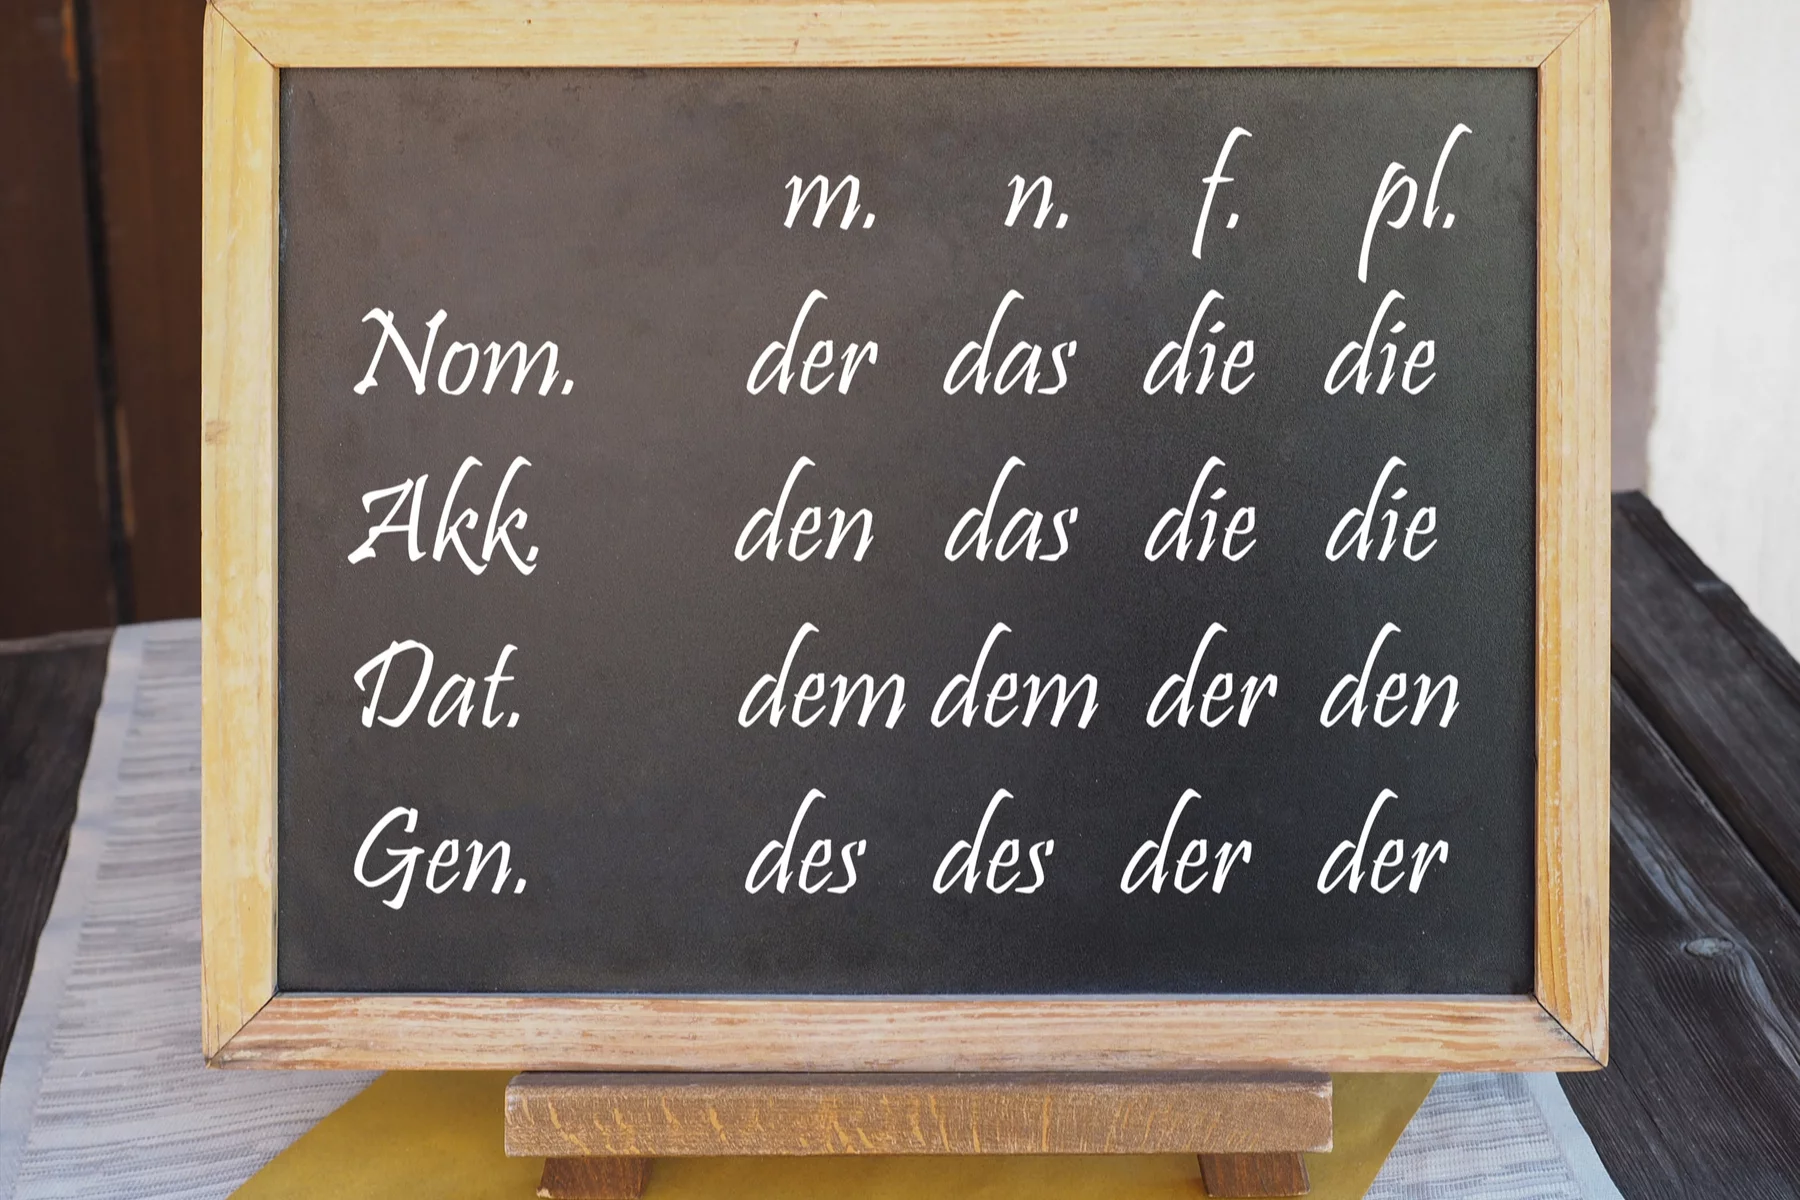 Definite articles in the German language